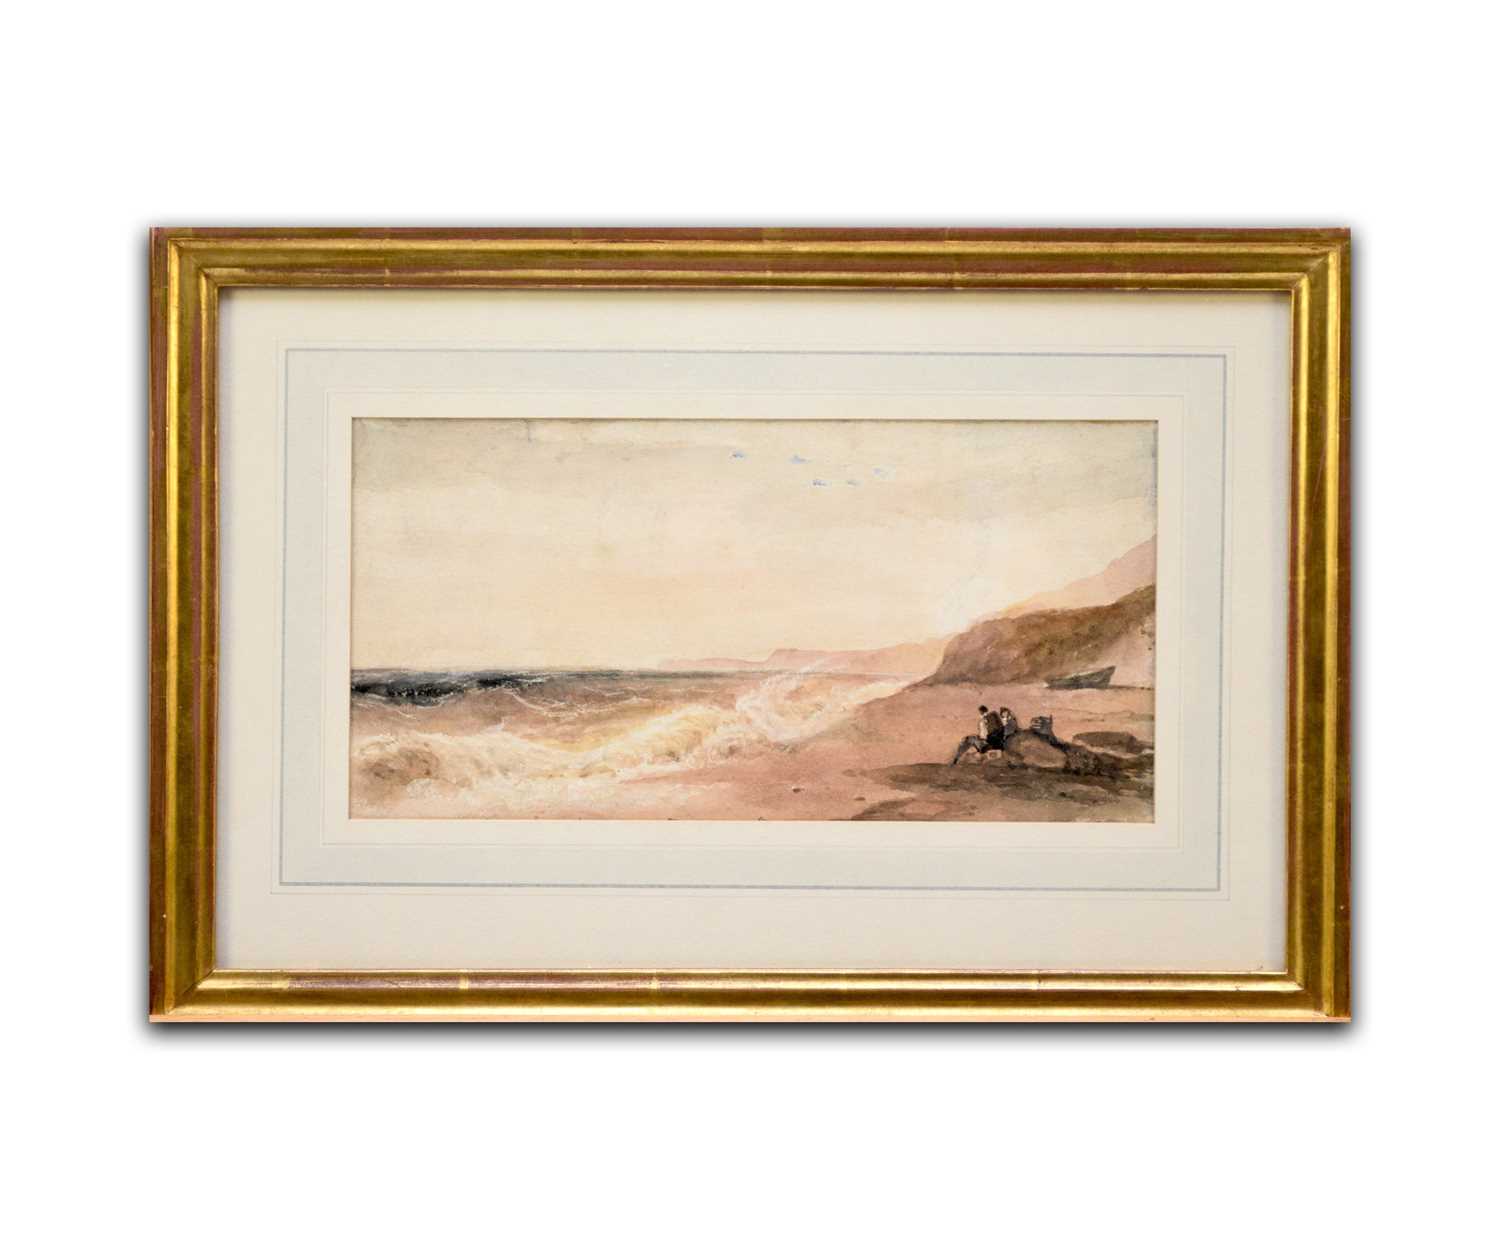 Peter de Wint O.W.S. (British, 1784 - 1849), 'On the Beach, South Coast', watercolour, 16.8 x 33.6cm